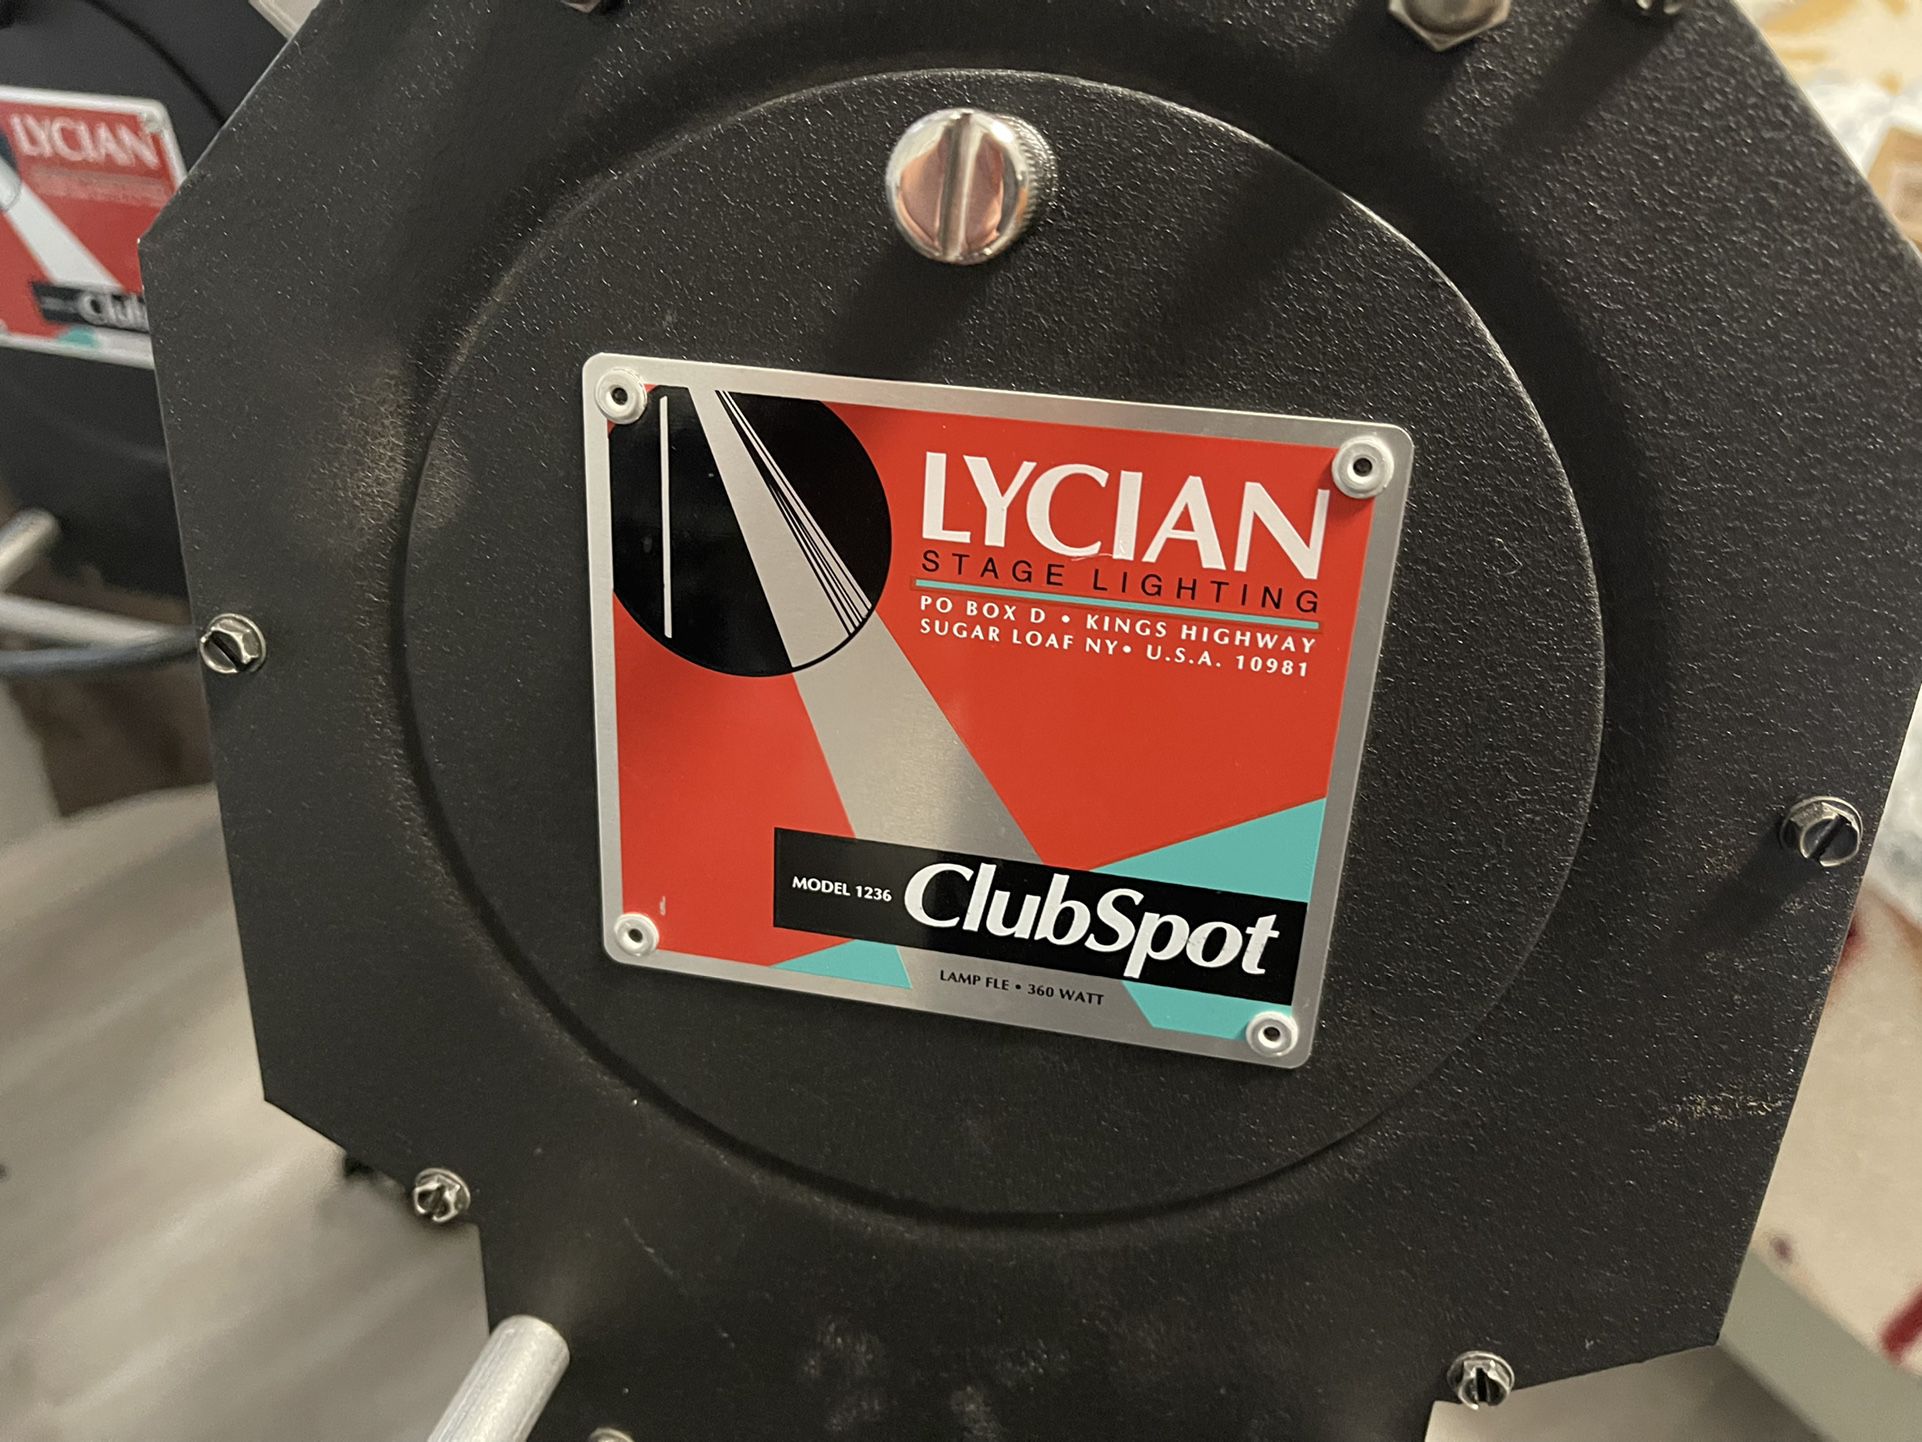 2 Lycian Club spot Lights